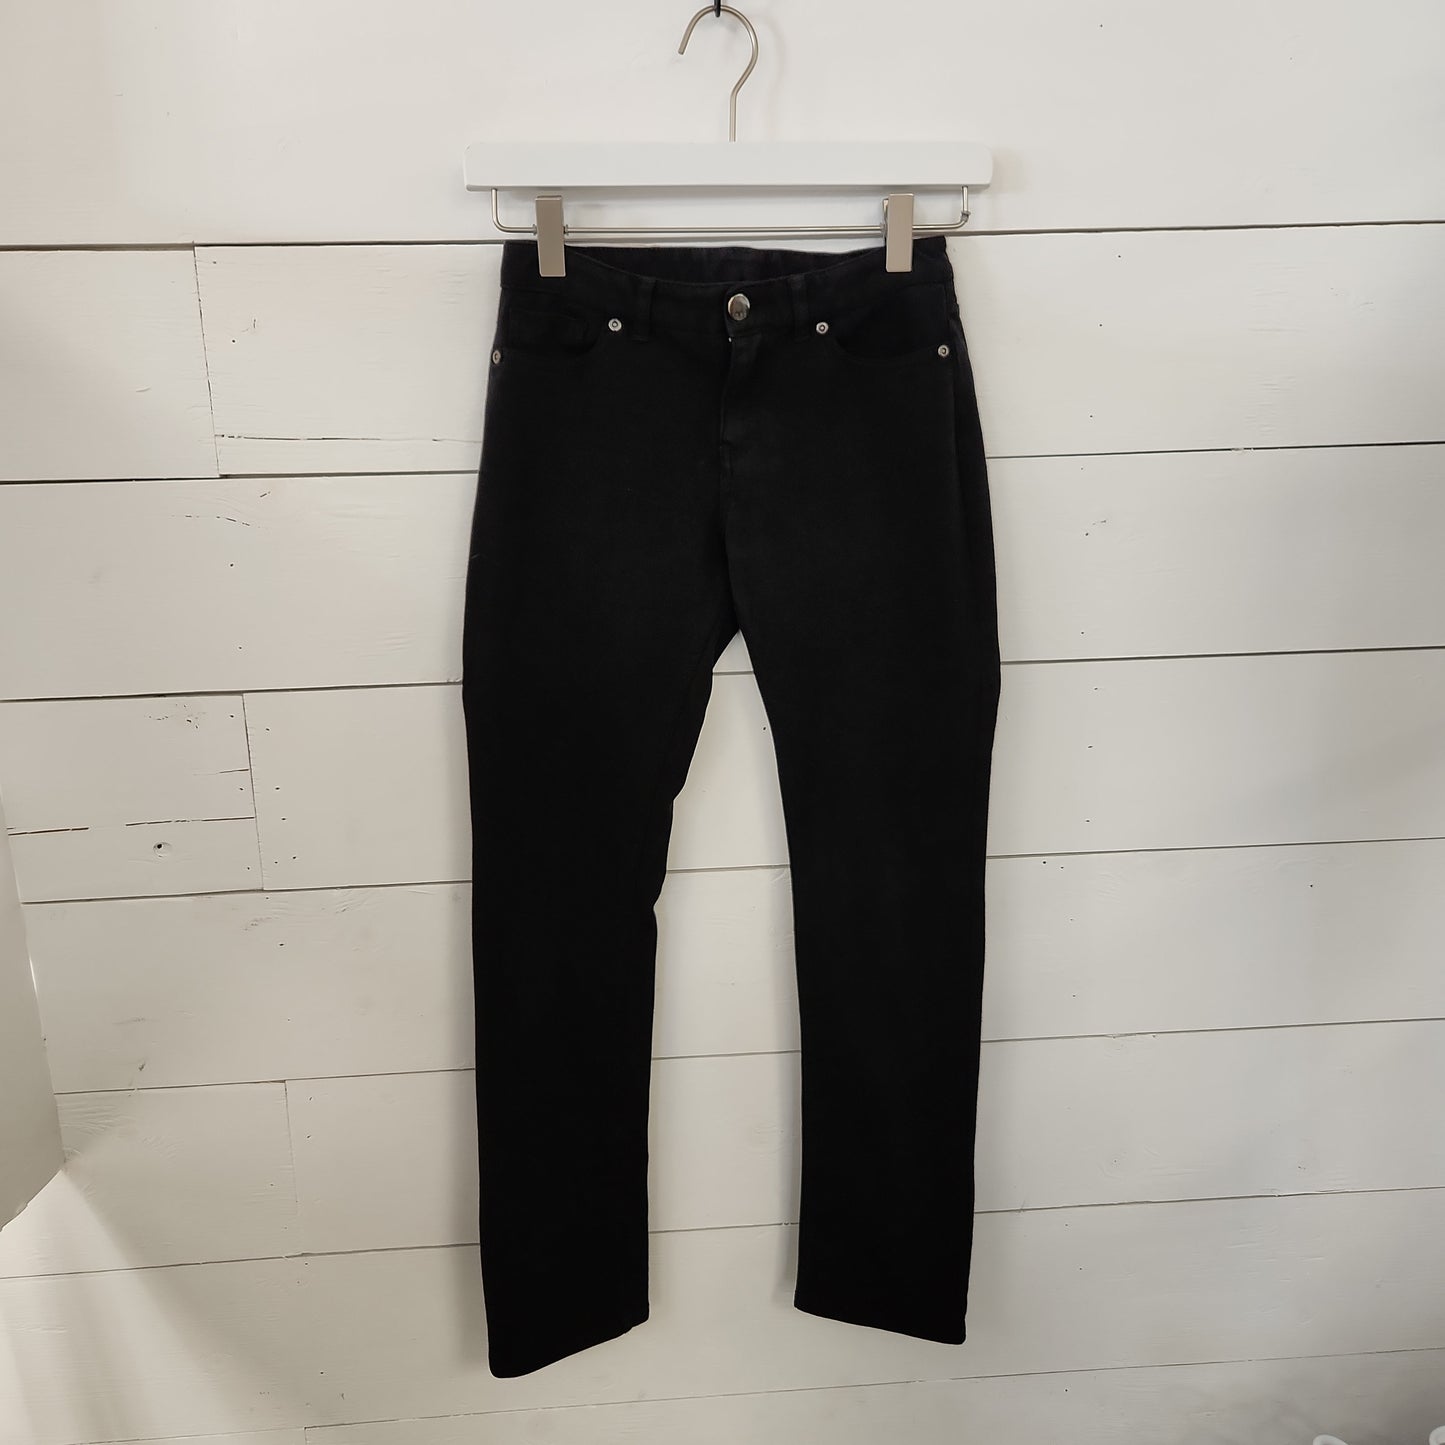 Size 10 | Gap Kids Black Stretch Jeans | Secondhand